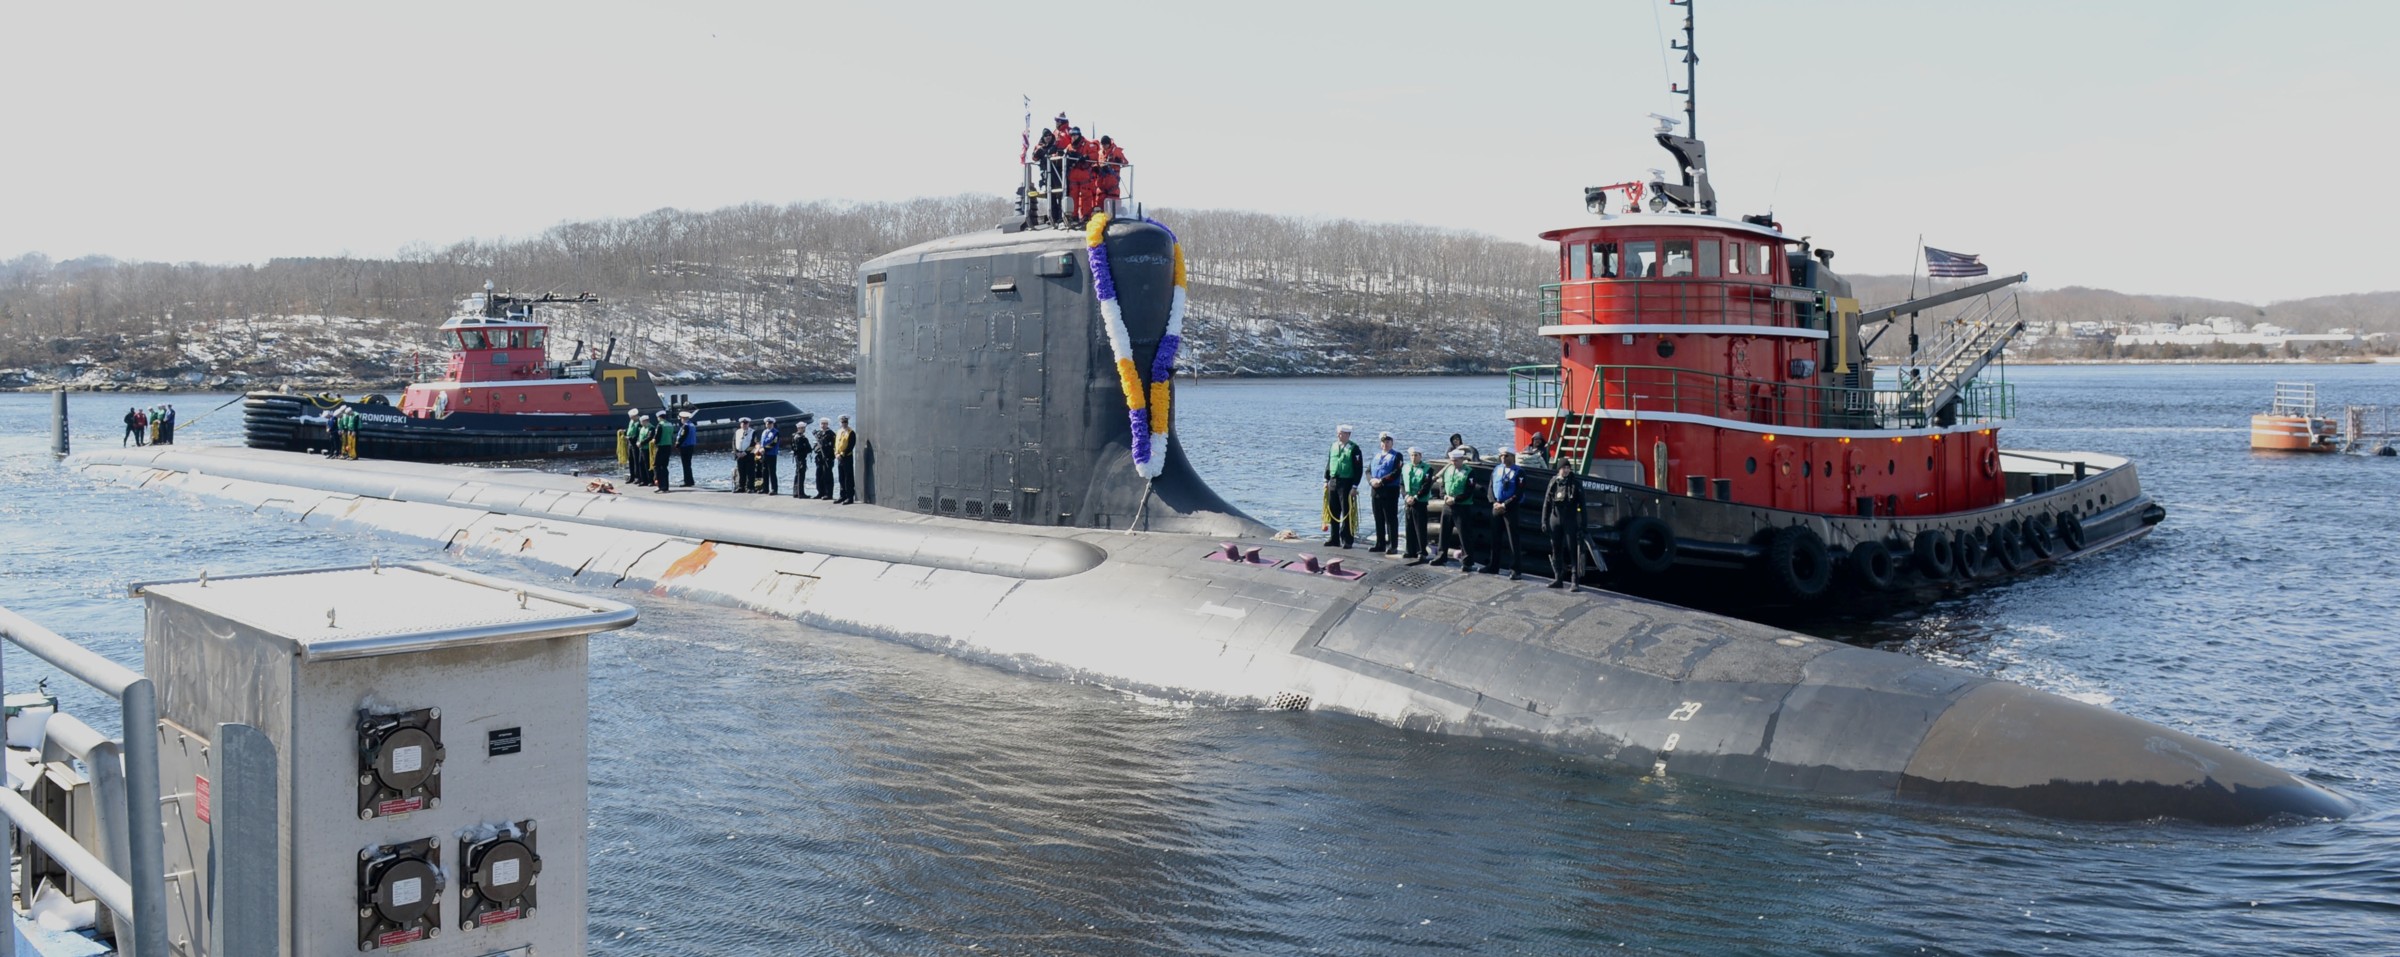 ssn-783 uss minnesota virginia class attack submarine us navy 34 subase new london groton